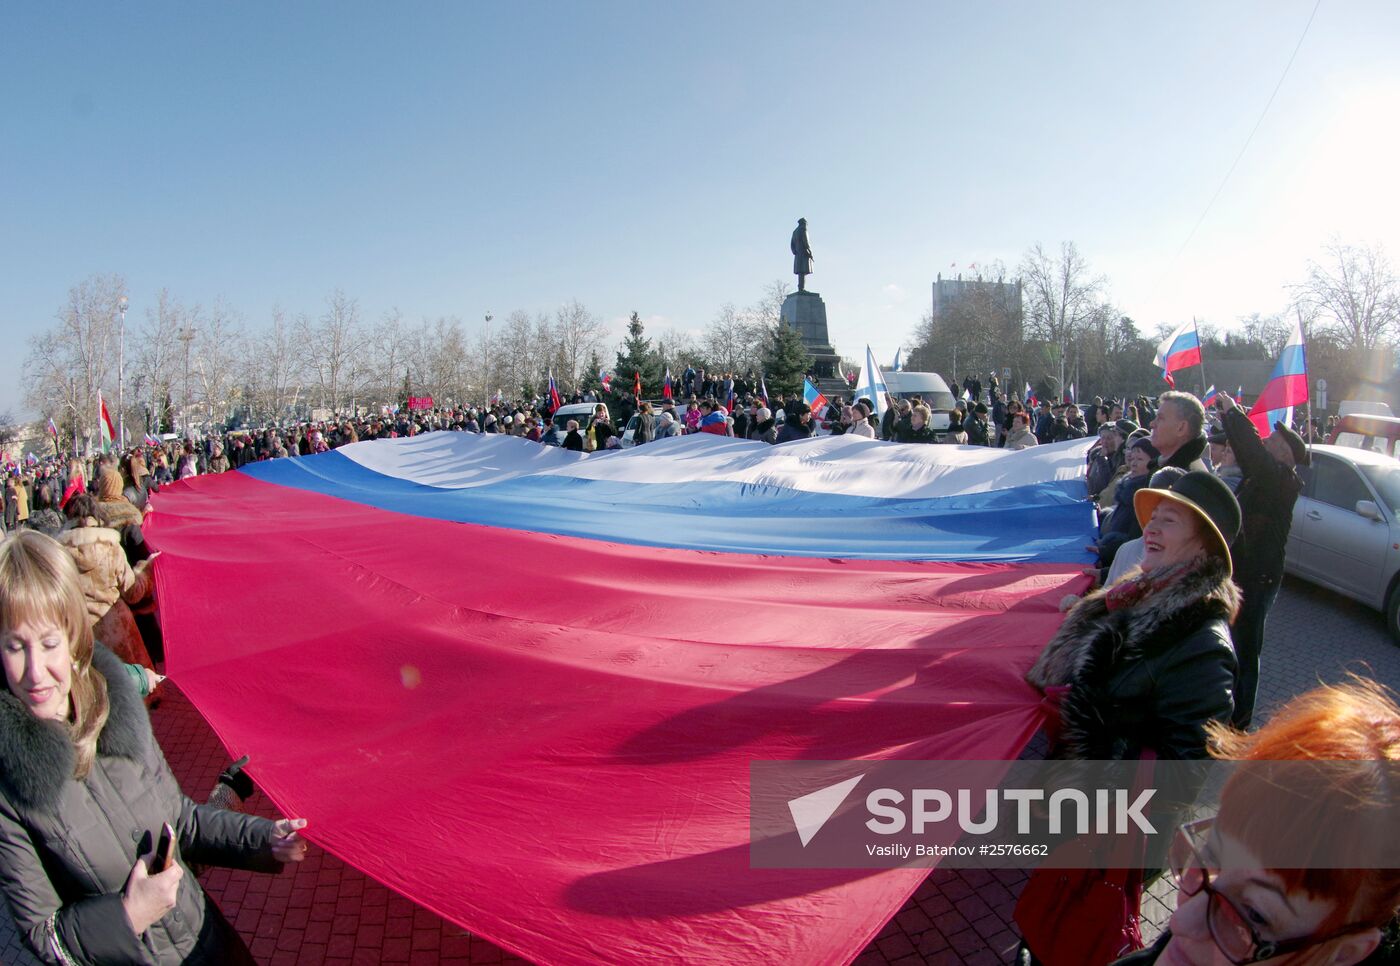 Antimaidan rally in Crimea